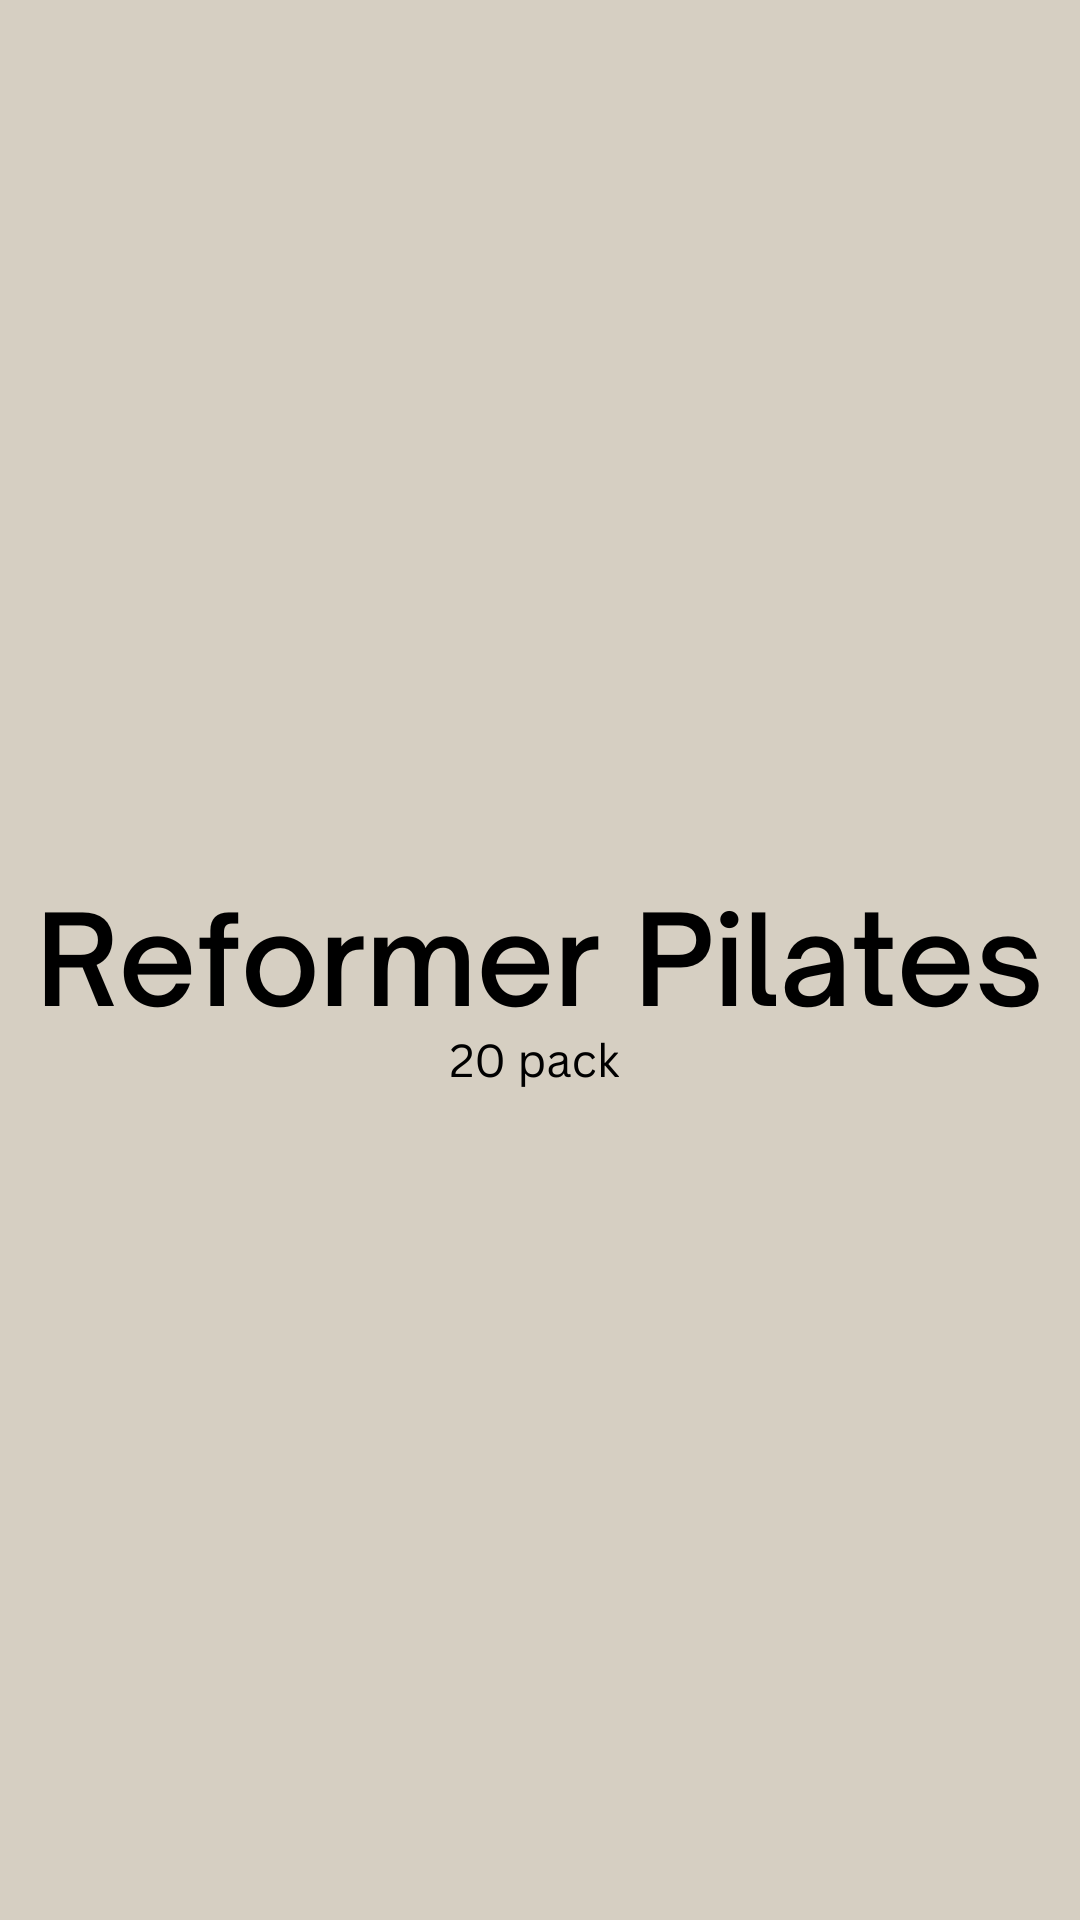 Limbr - Reformer Pilates 20 pack